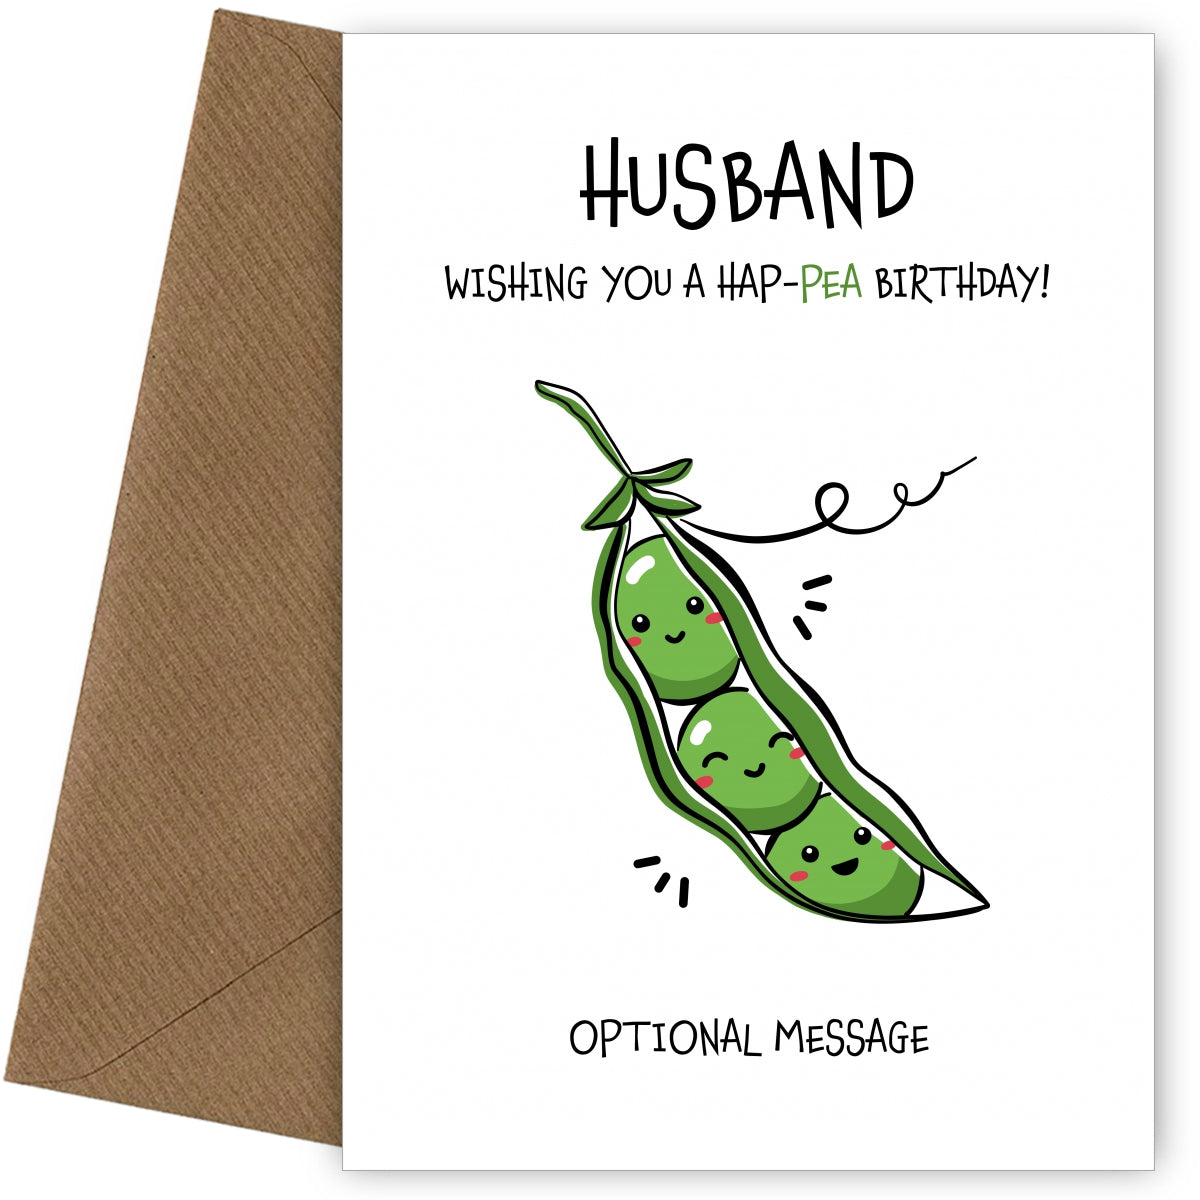 Happy Birthday Card for Husband - Hap-pea